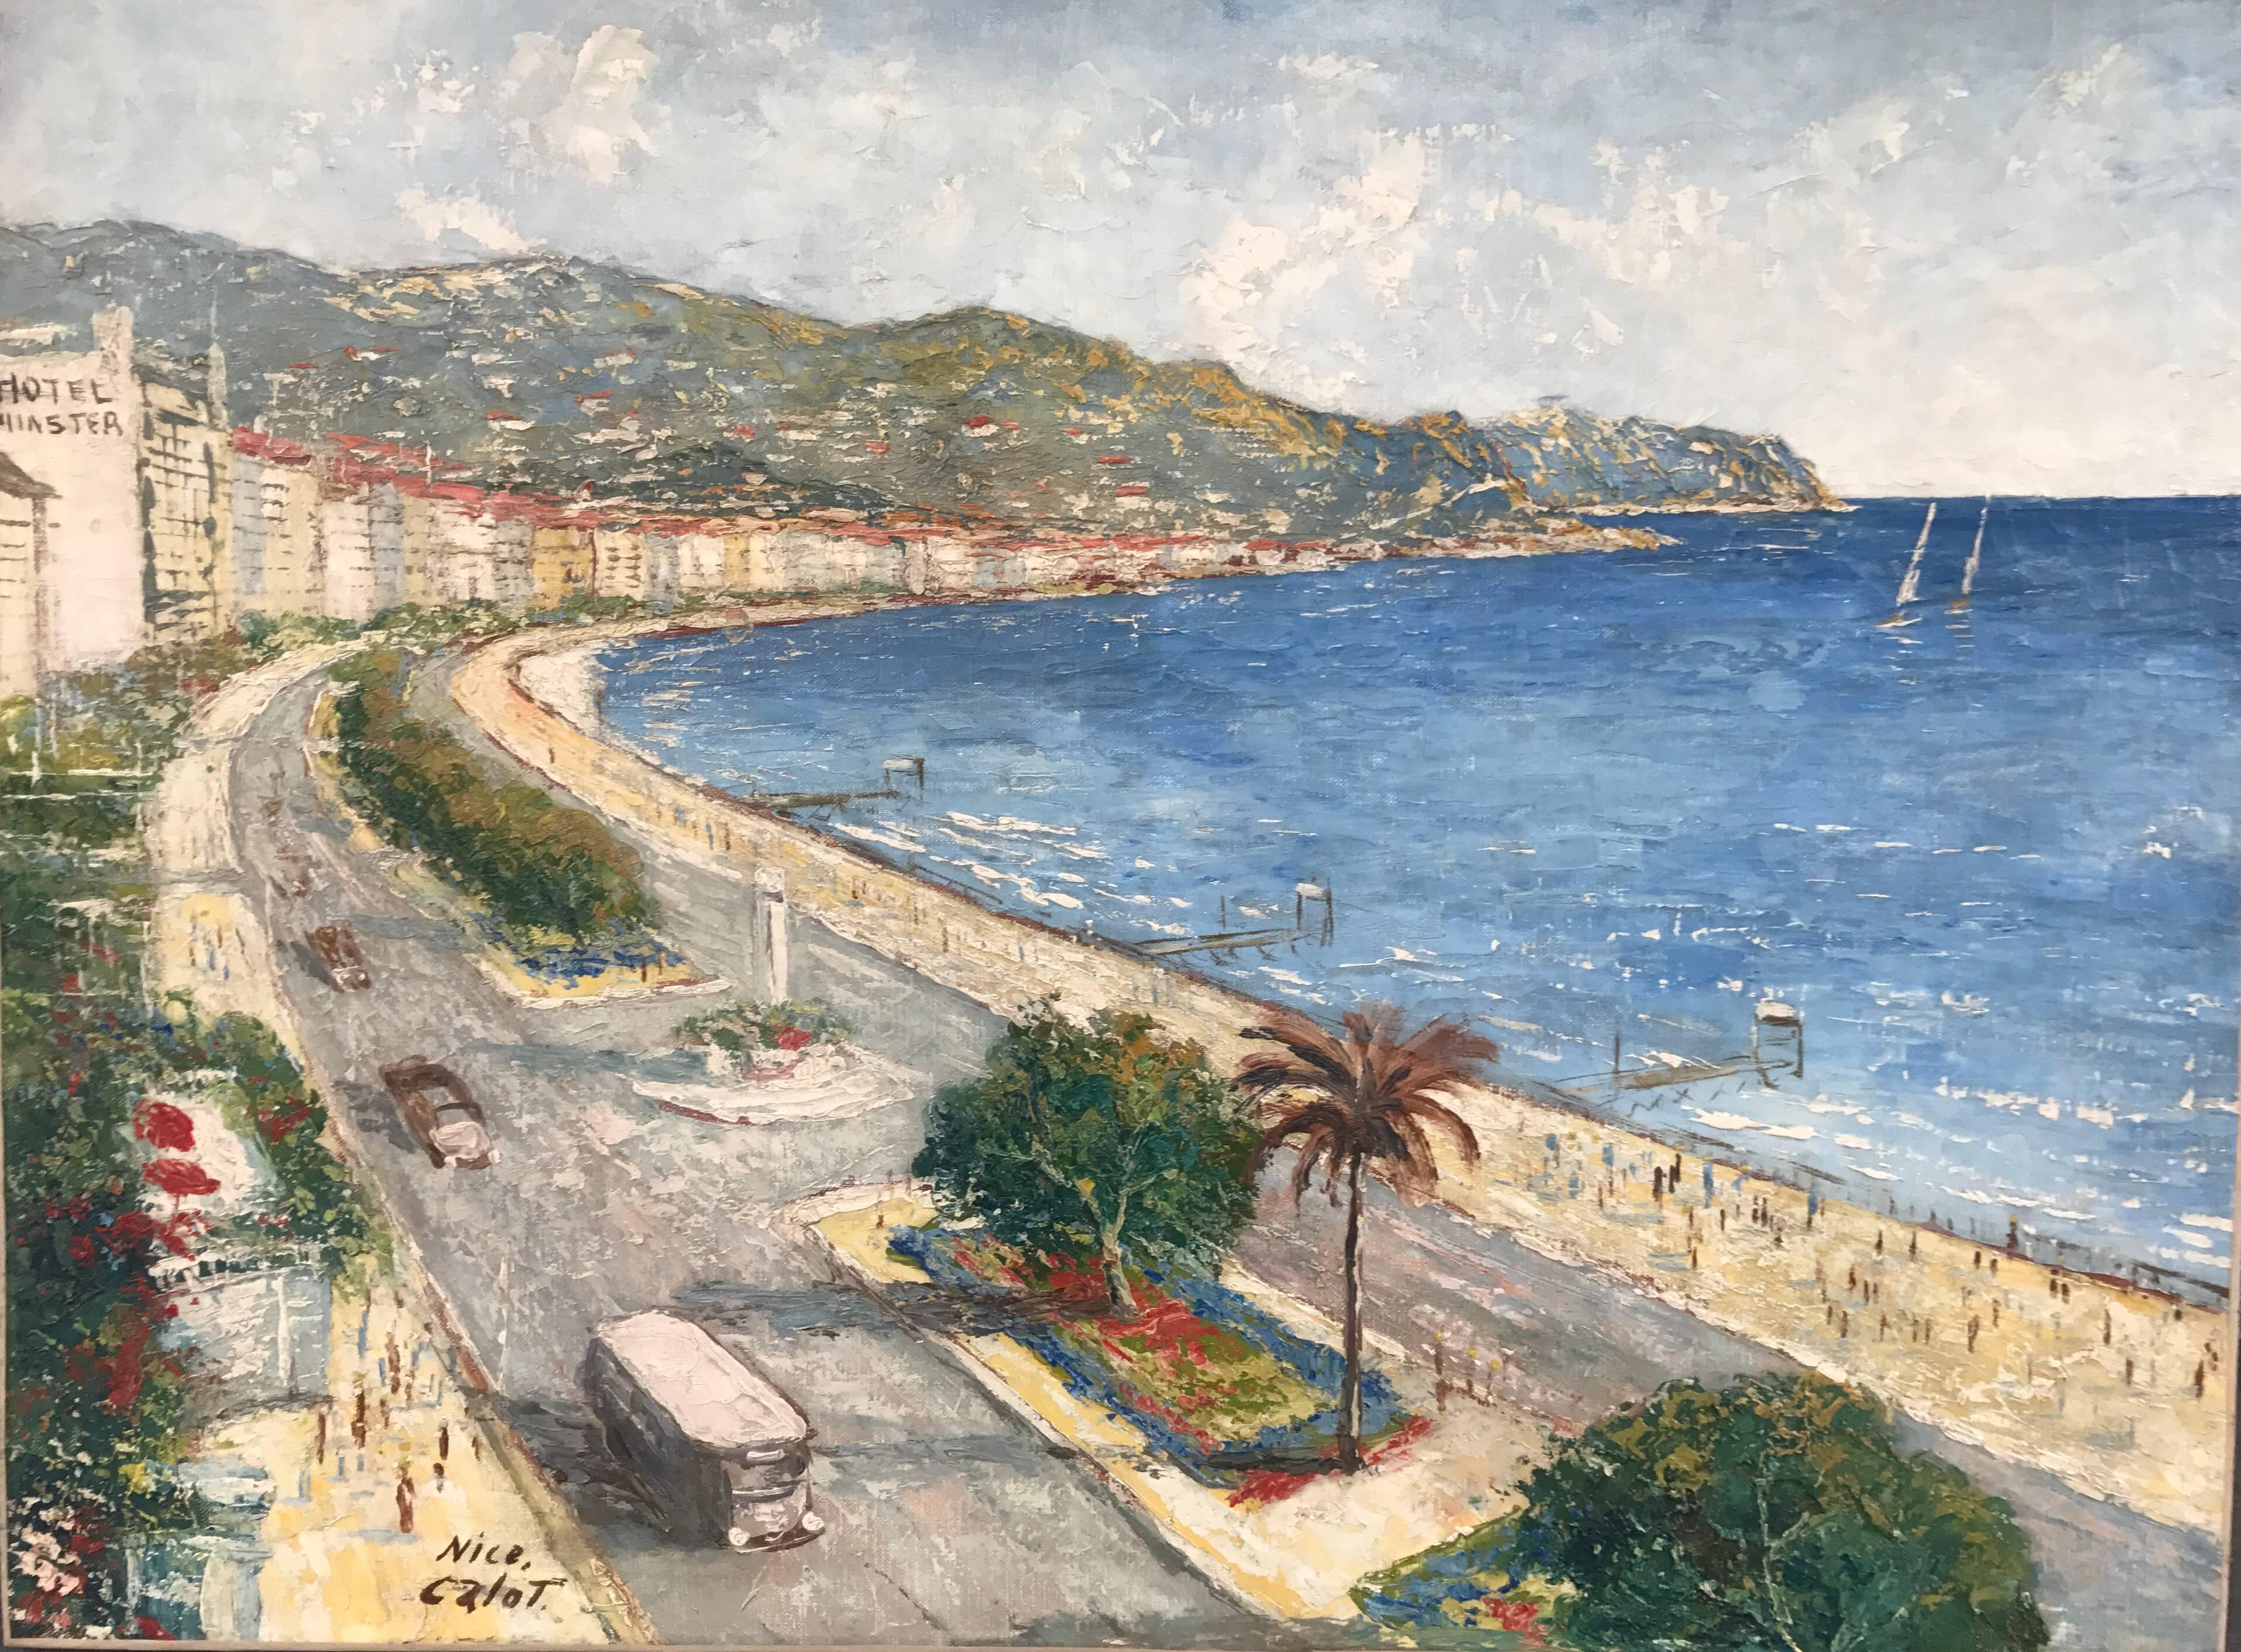 Marie Calot Figurative Painting - "Promenade des anglais, Nice, France"